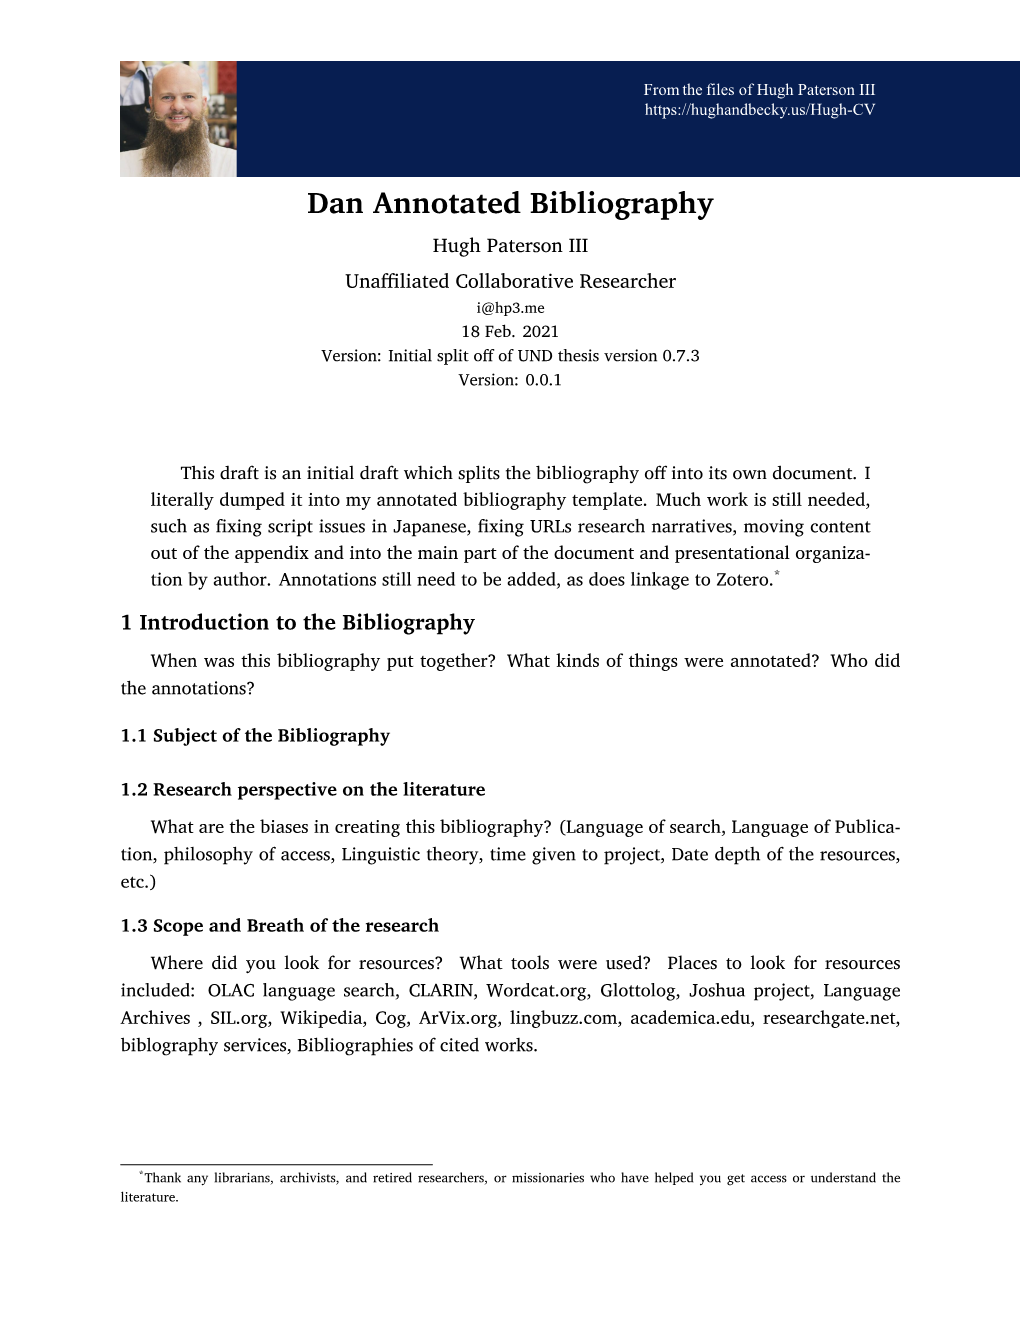 Dan Annotated Bibliography Hugh Paterson III Unaffiliated Collaborative Researcher I@Hp3.Me 18 Feb